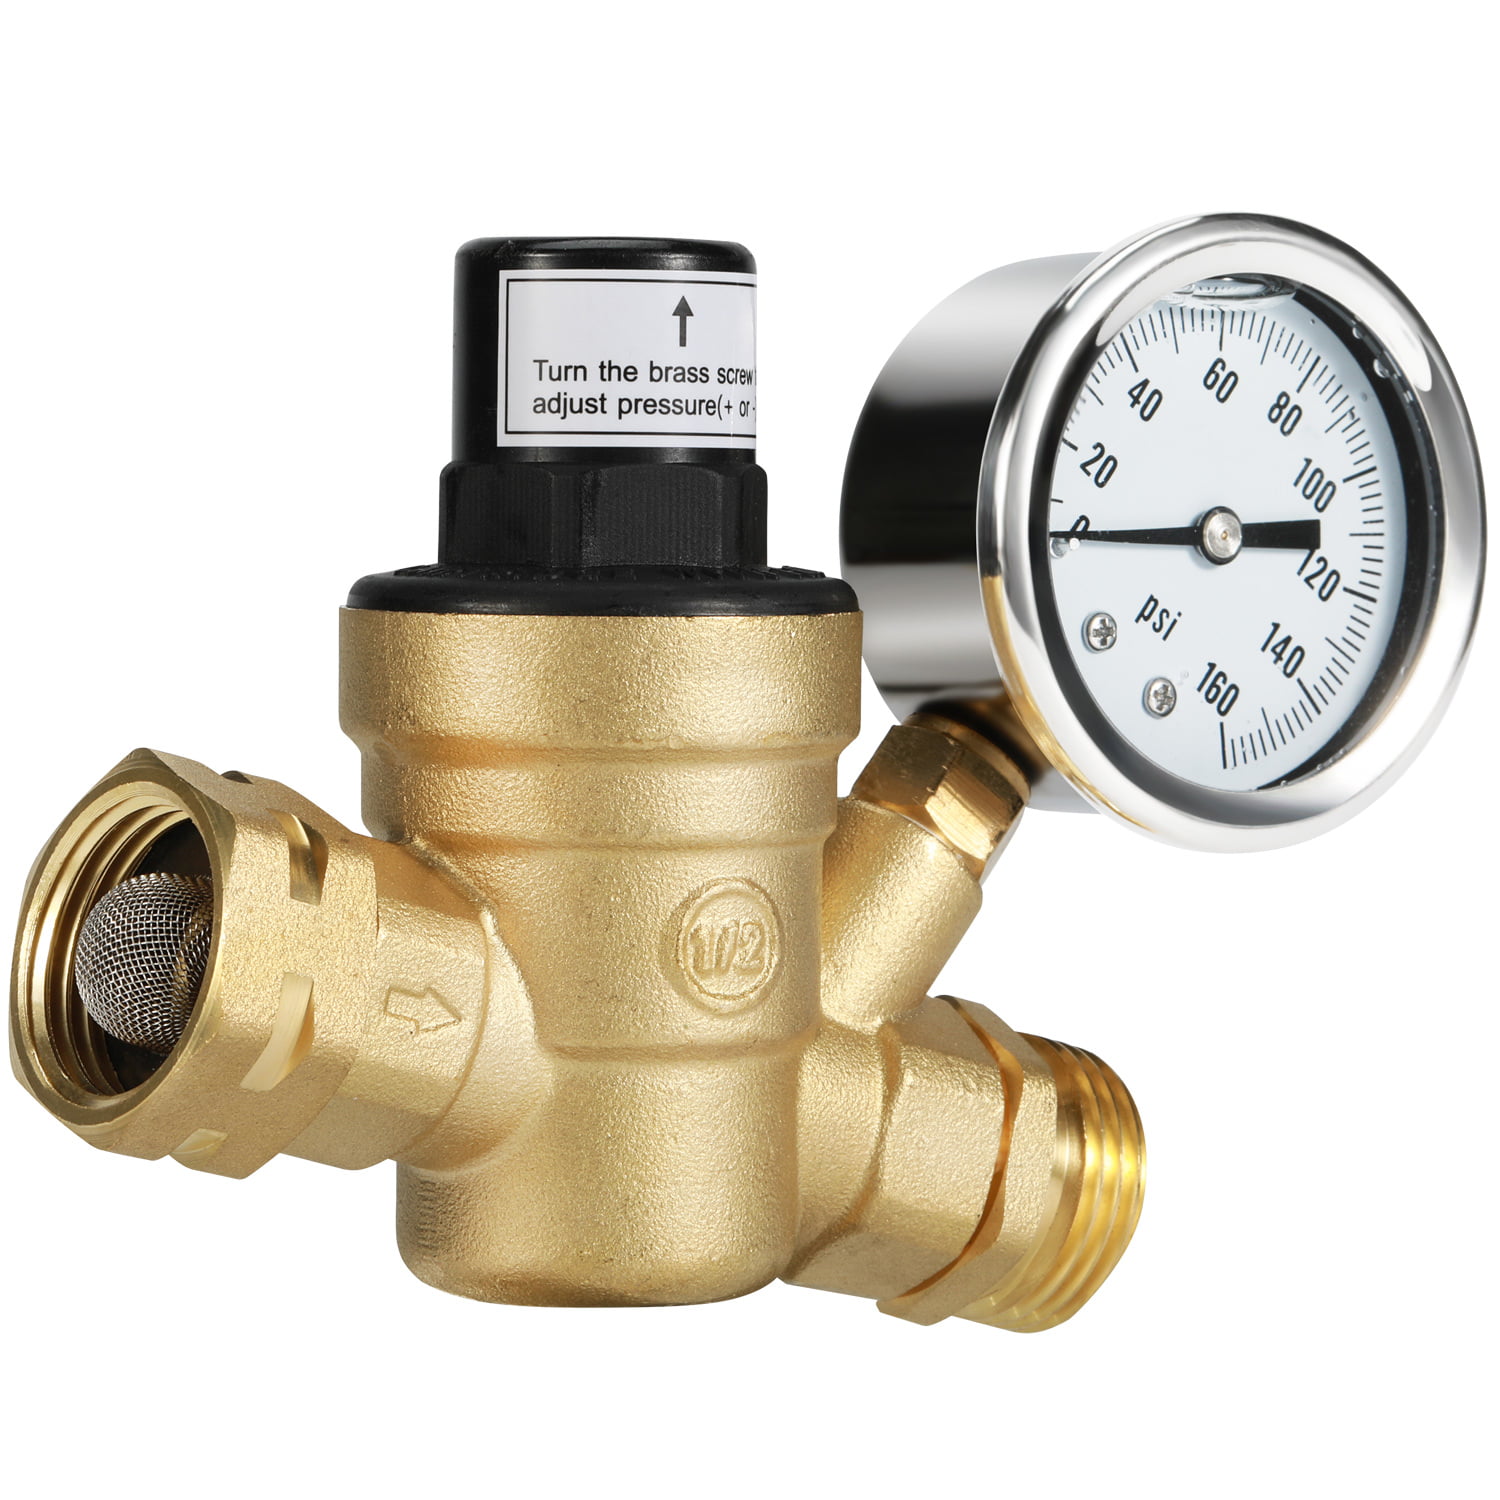 Kohree Water Pressure Regulator Valve, Brass Lead-free Adjustable Water Rv Adjustable Water Pressure Regulator With Gauge